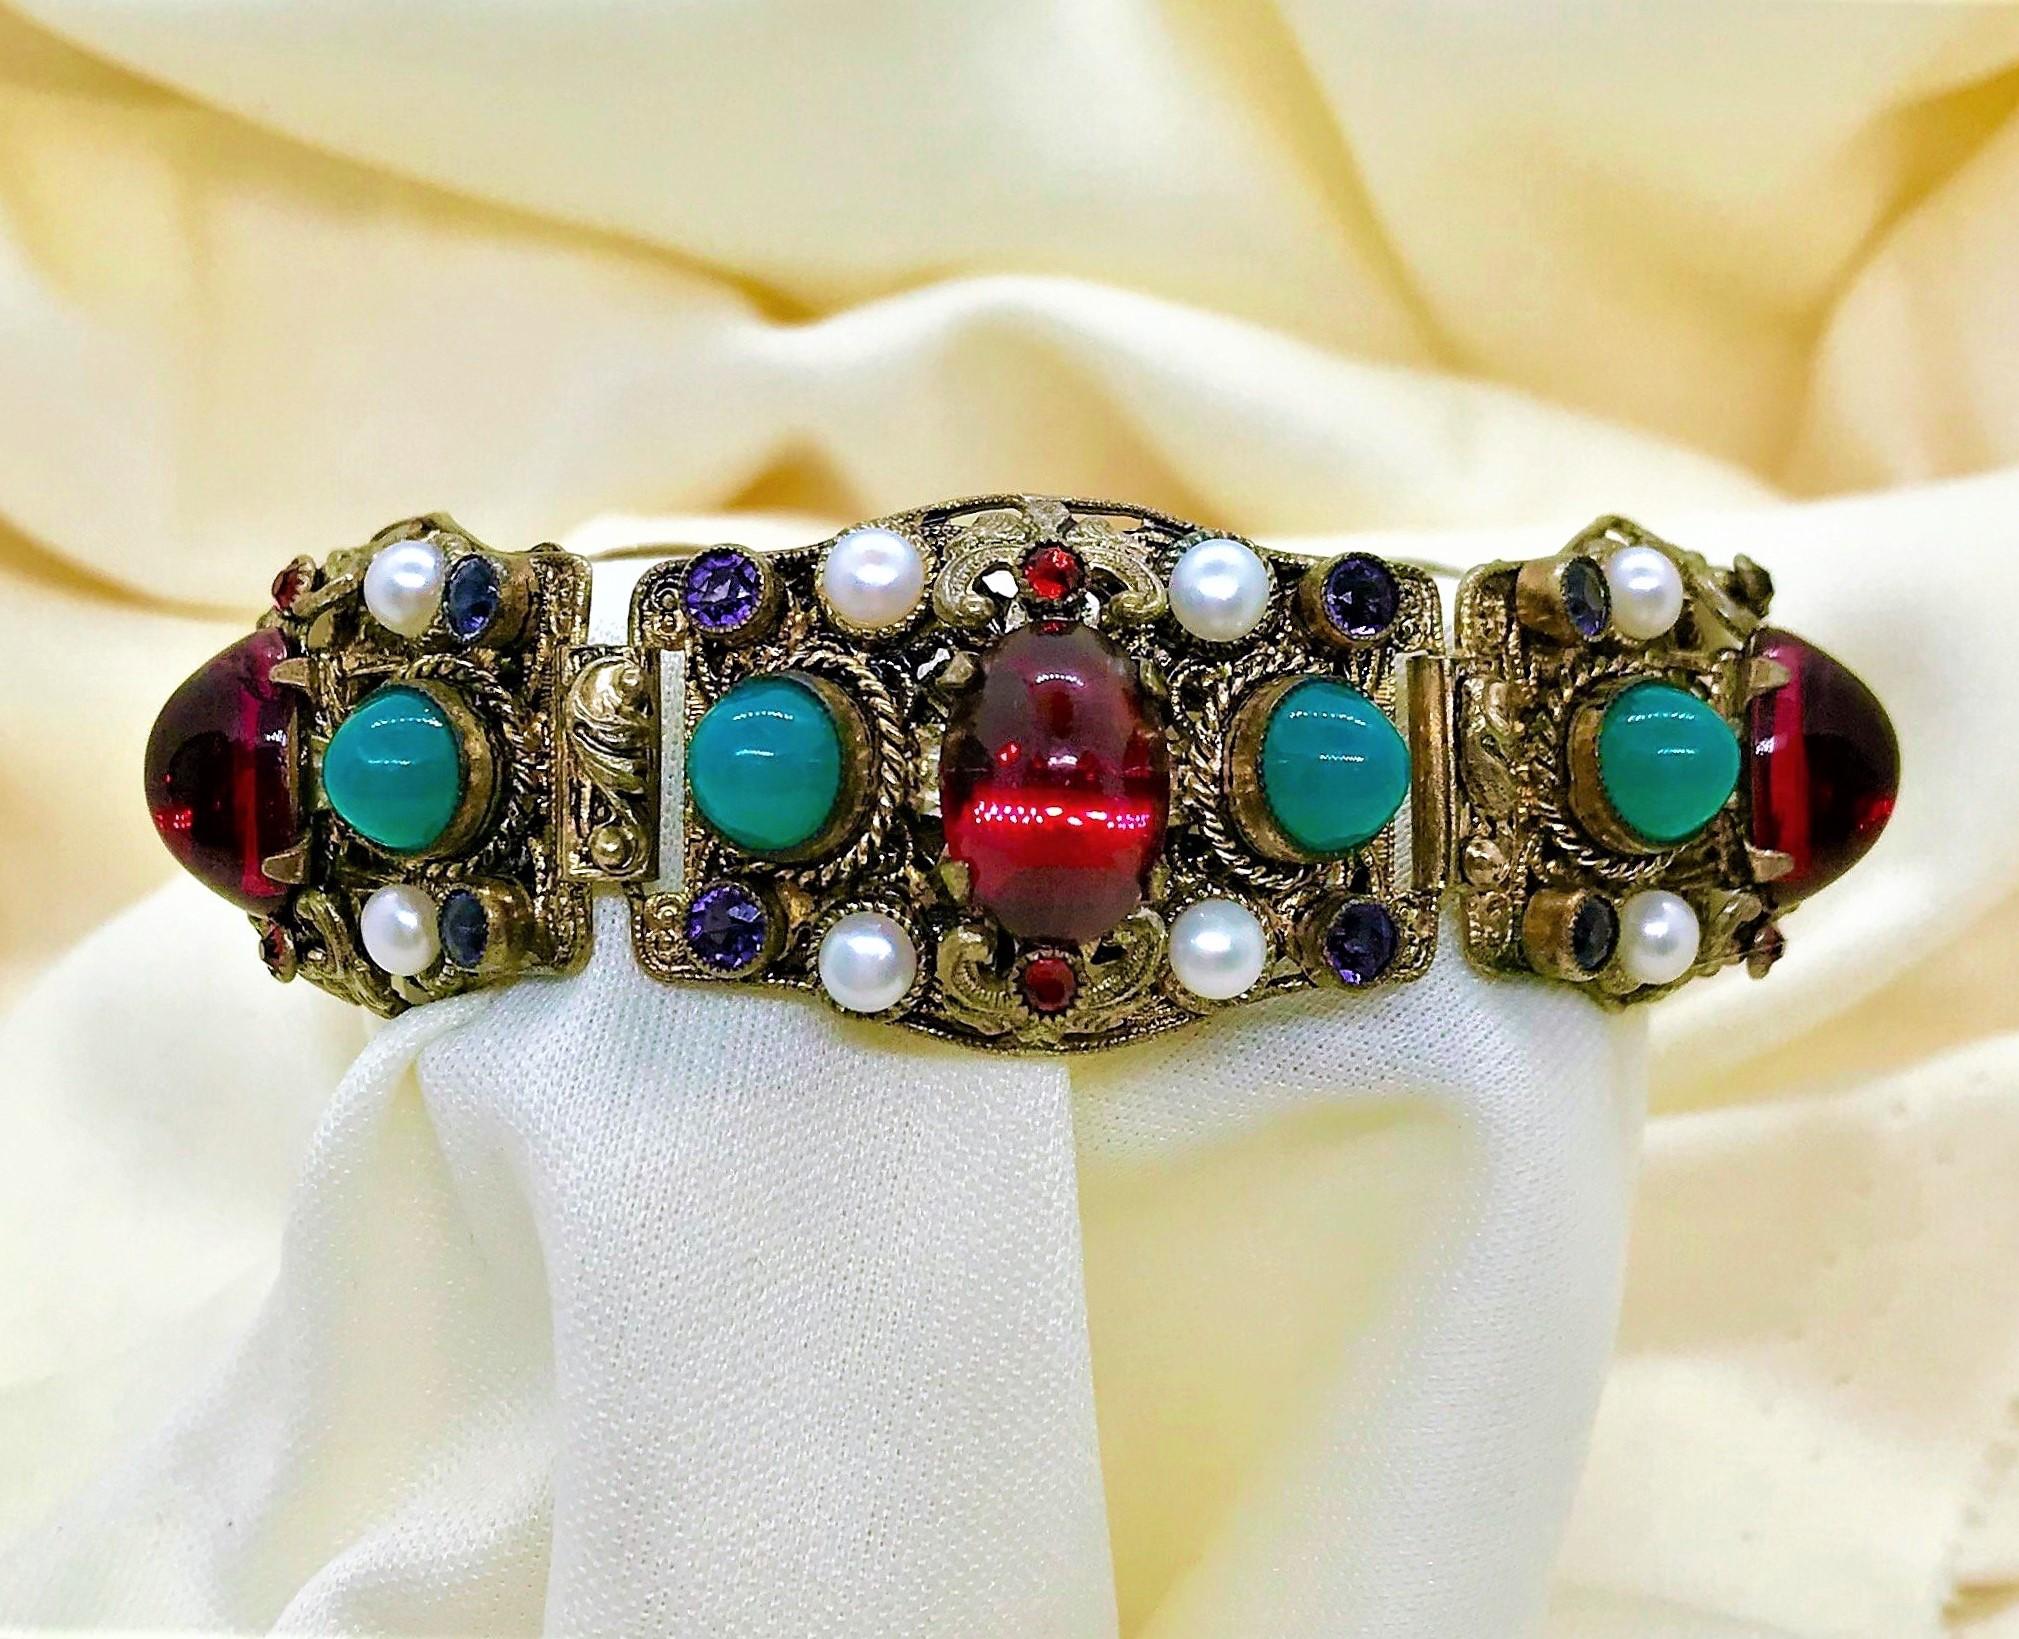 Circa 1950 Austro Hungarian Revival Jeweled Bracelet  For Sale 2